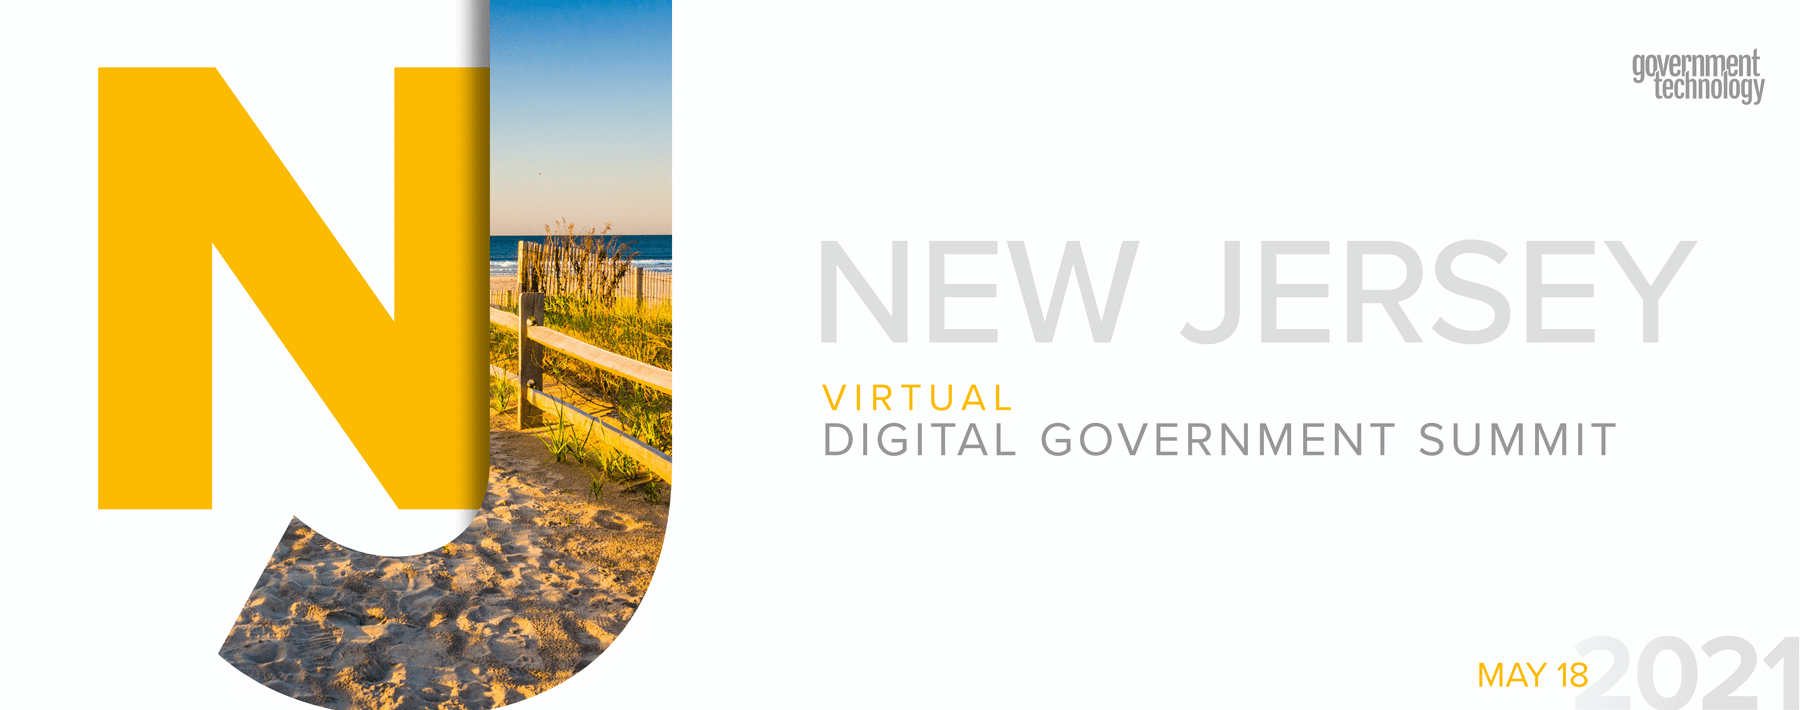 New Jersey Virtual Digital Government Summit